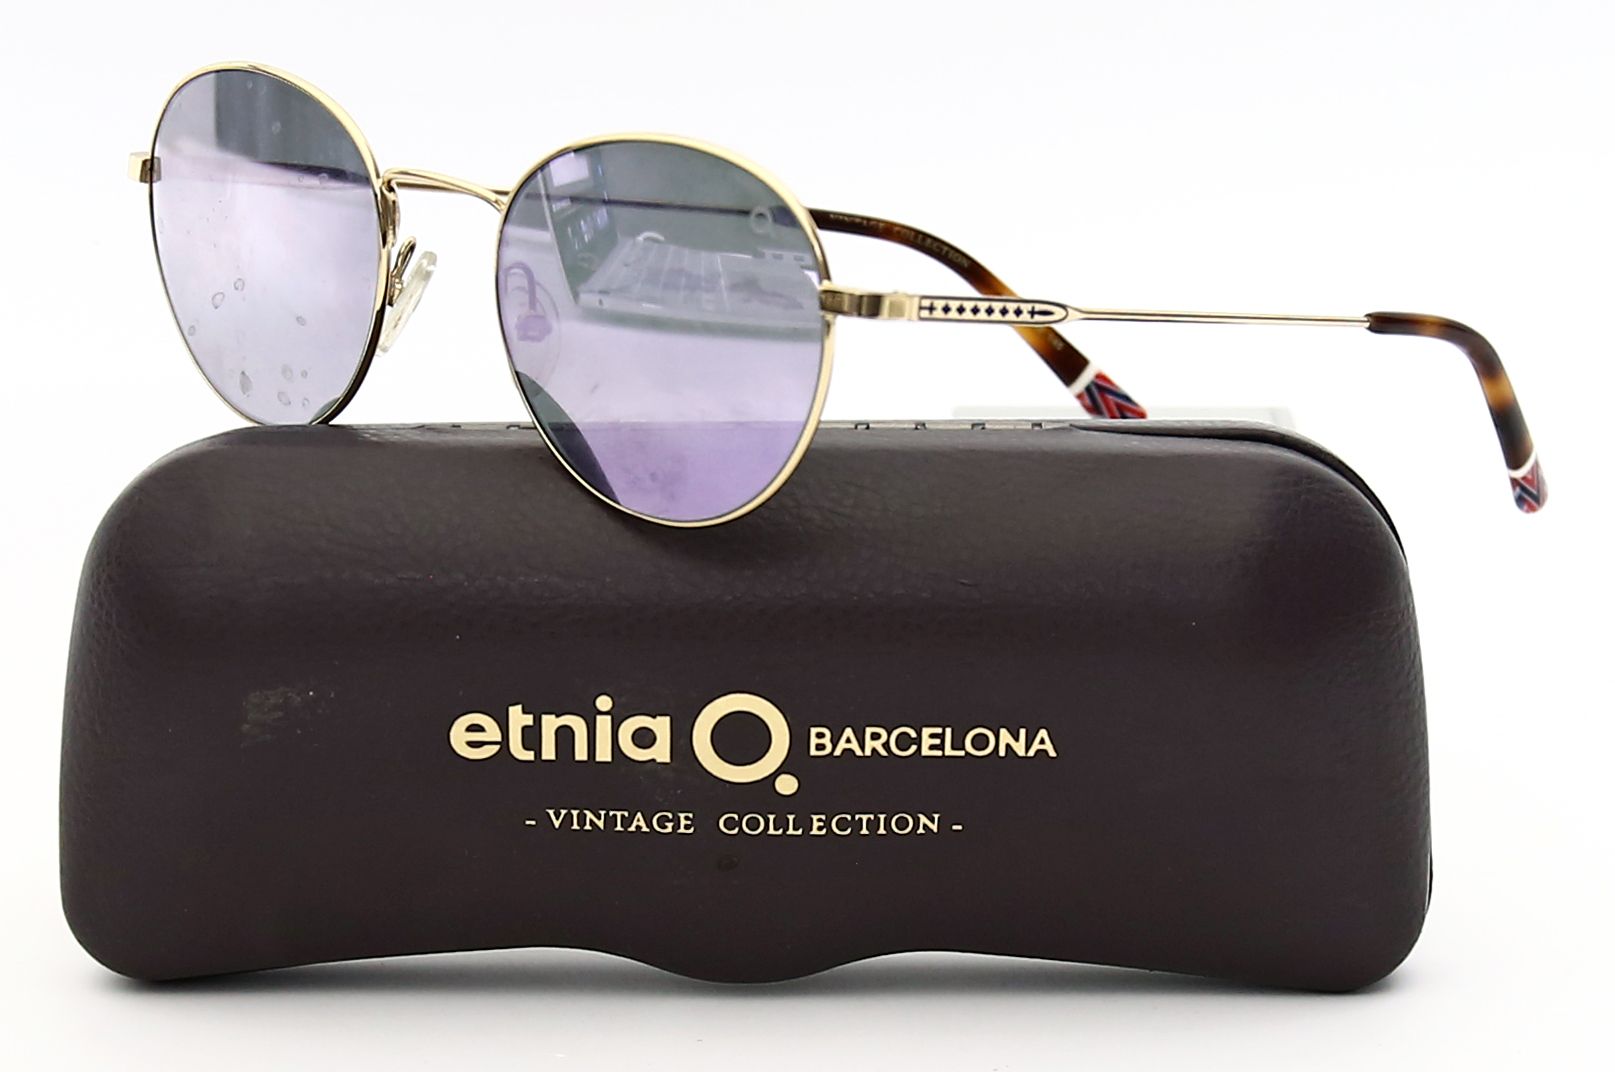 Vintage-Sonnenbrille, Etnia Barcelona.